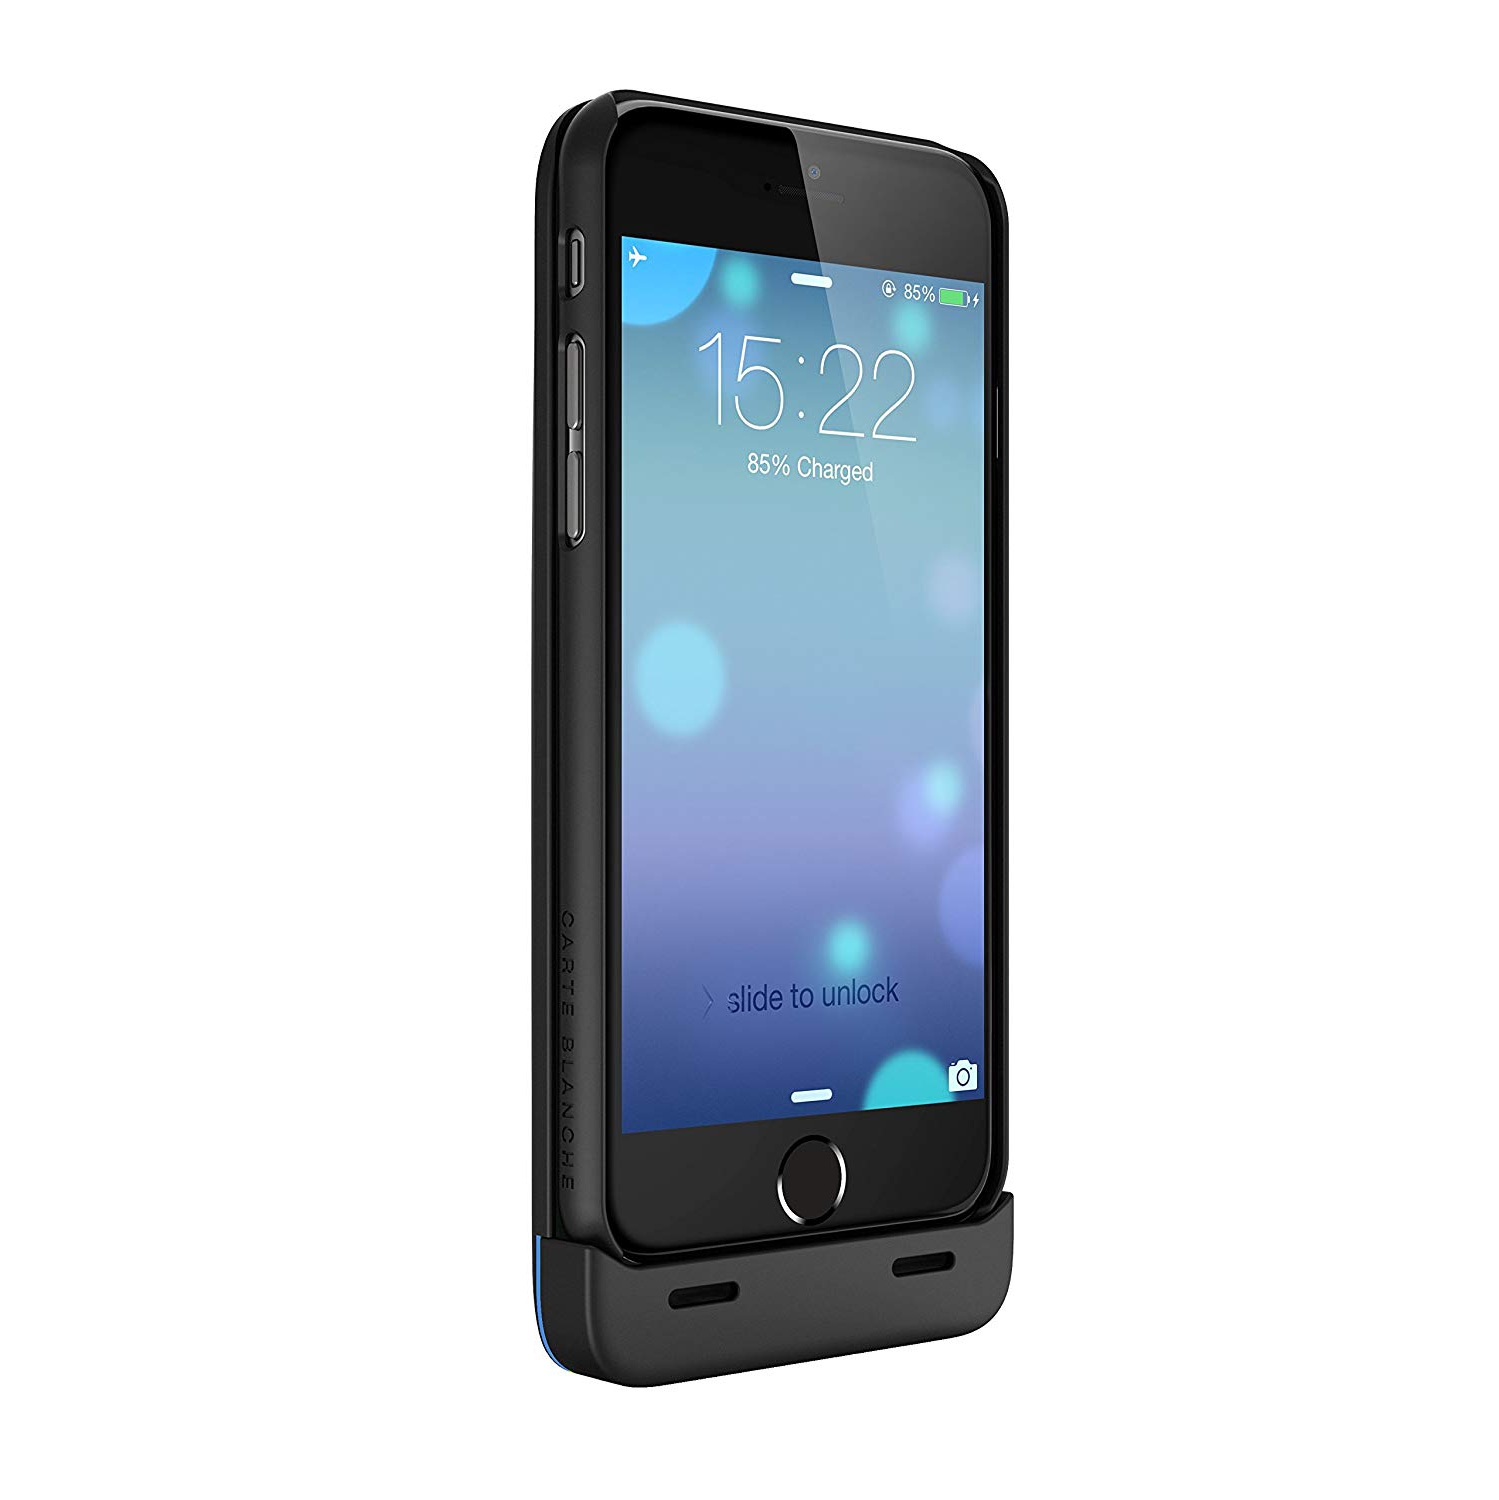 iPhone 6s Plus Battery Case, iPhone 6 Plus Battery Case - Boostcase Detachable Charging Case for iPhone 6 Plus 6s Plus [MFI Ce